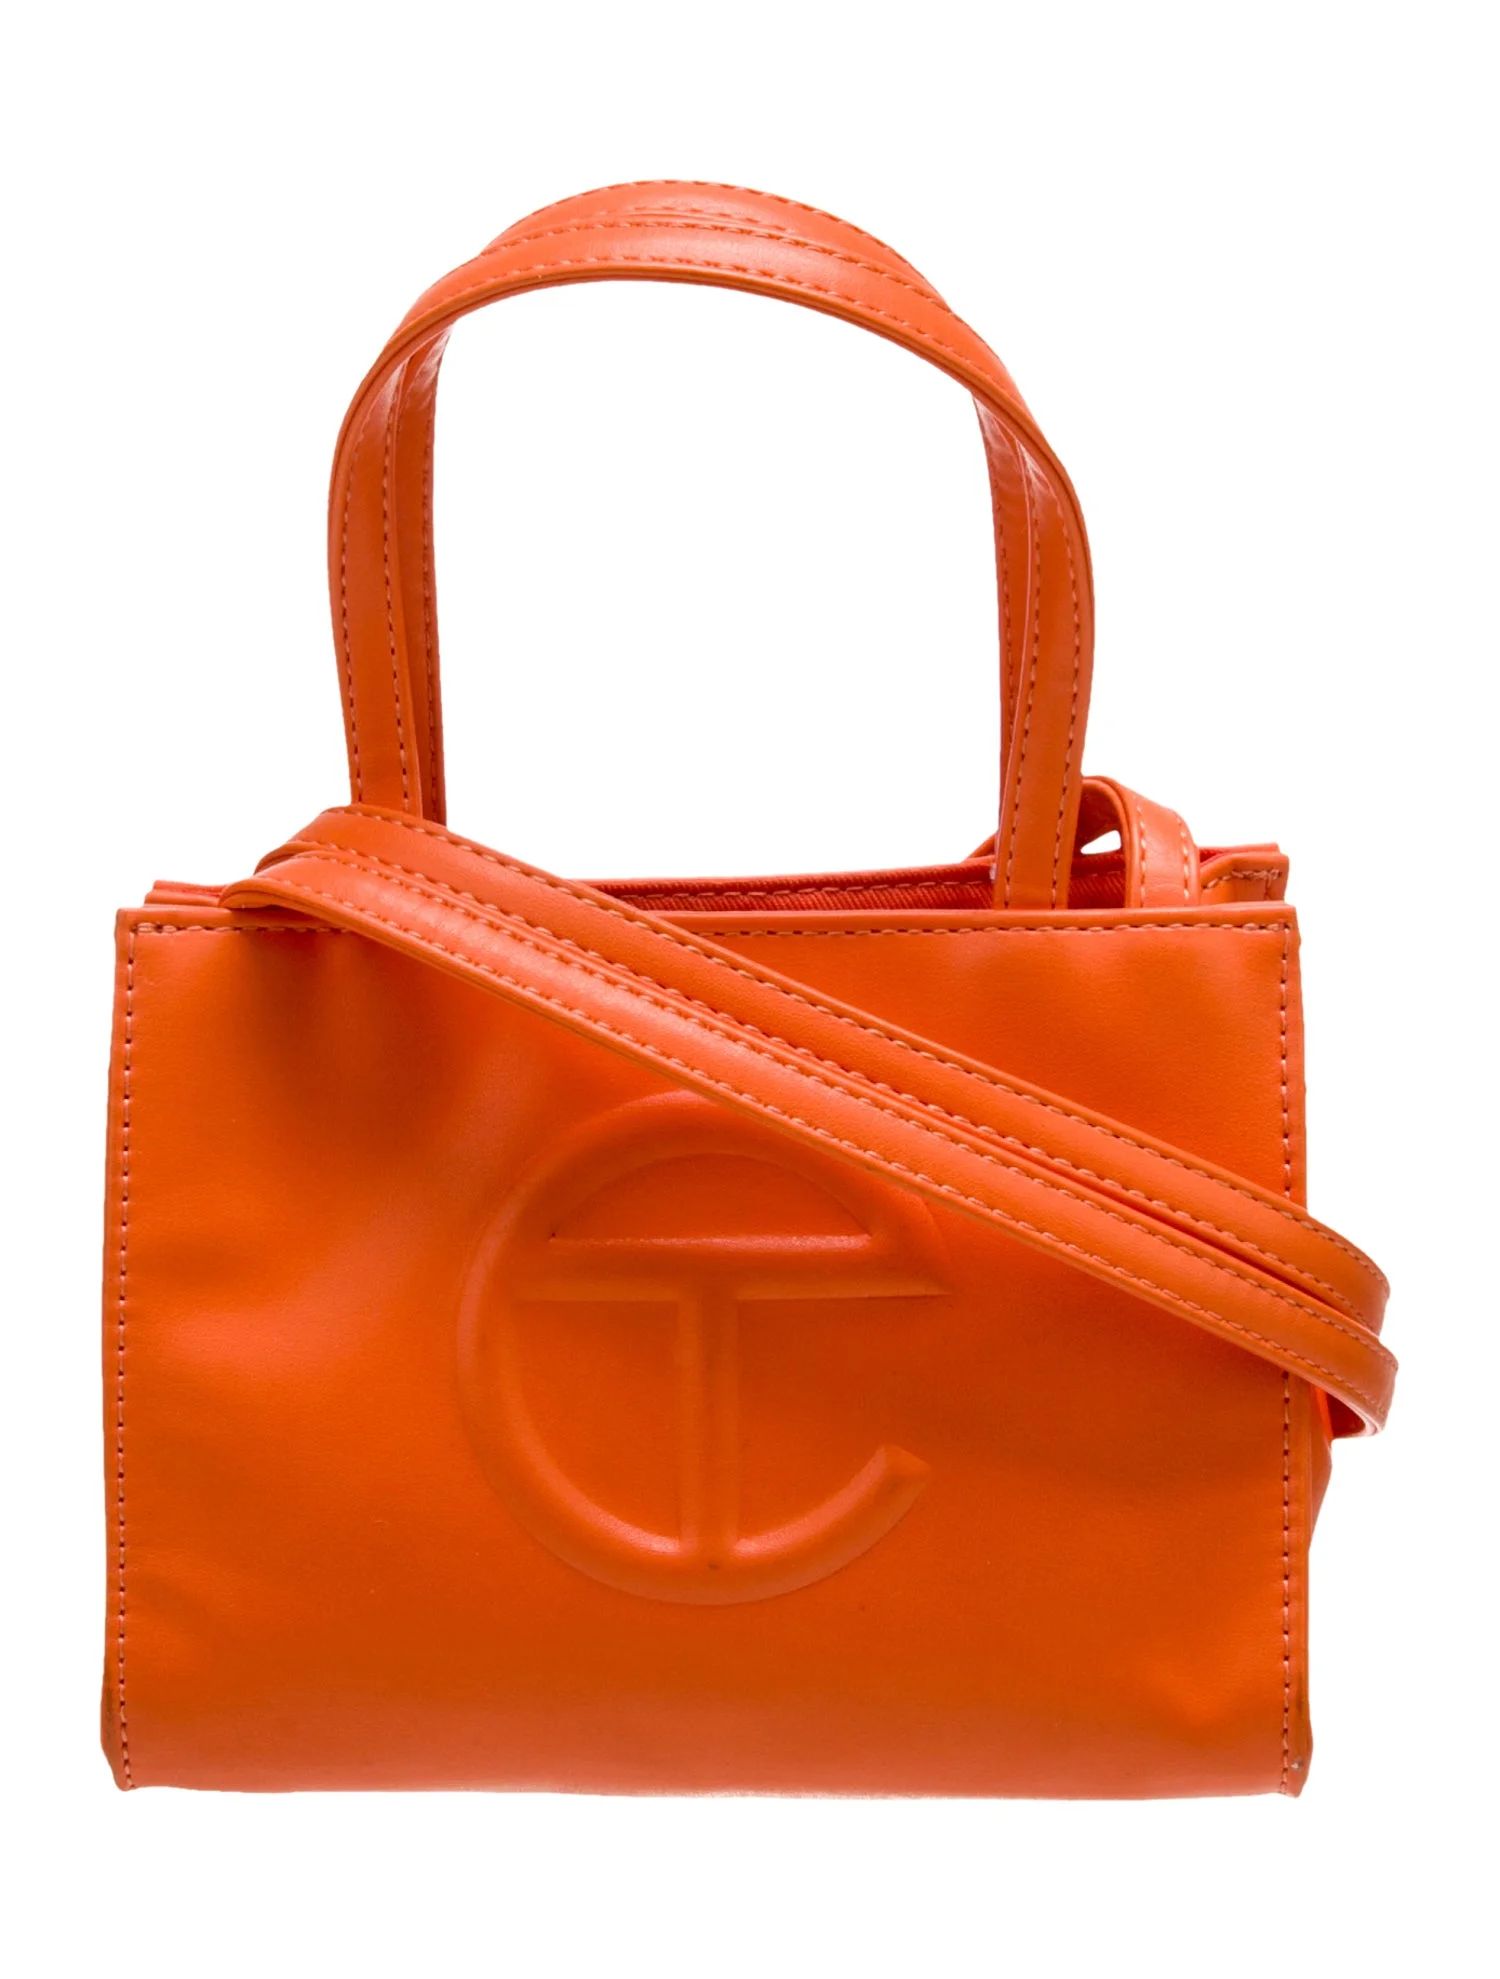 Small Orange Shopping Bag | The RealReal